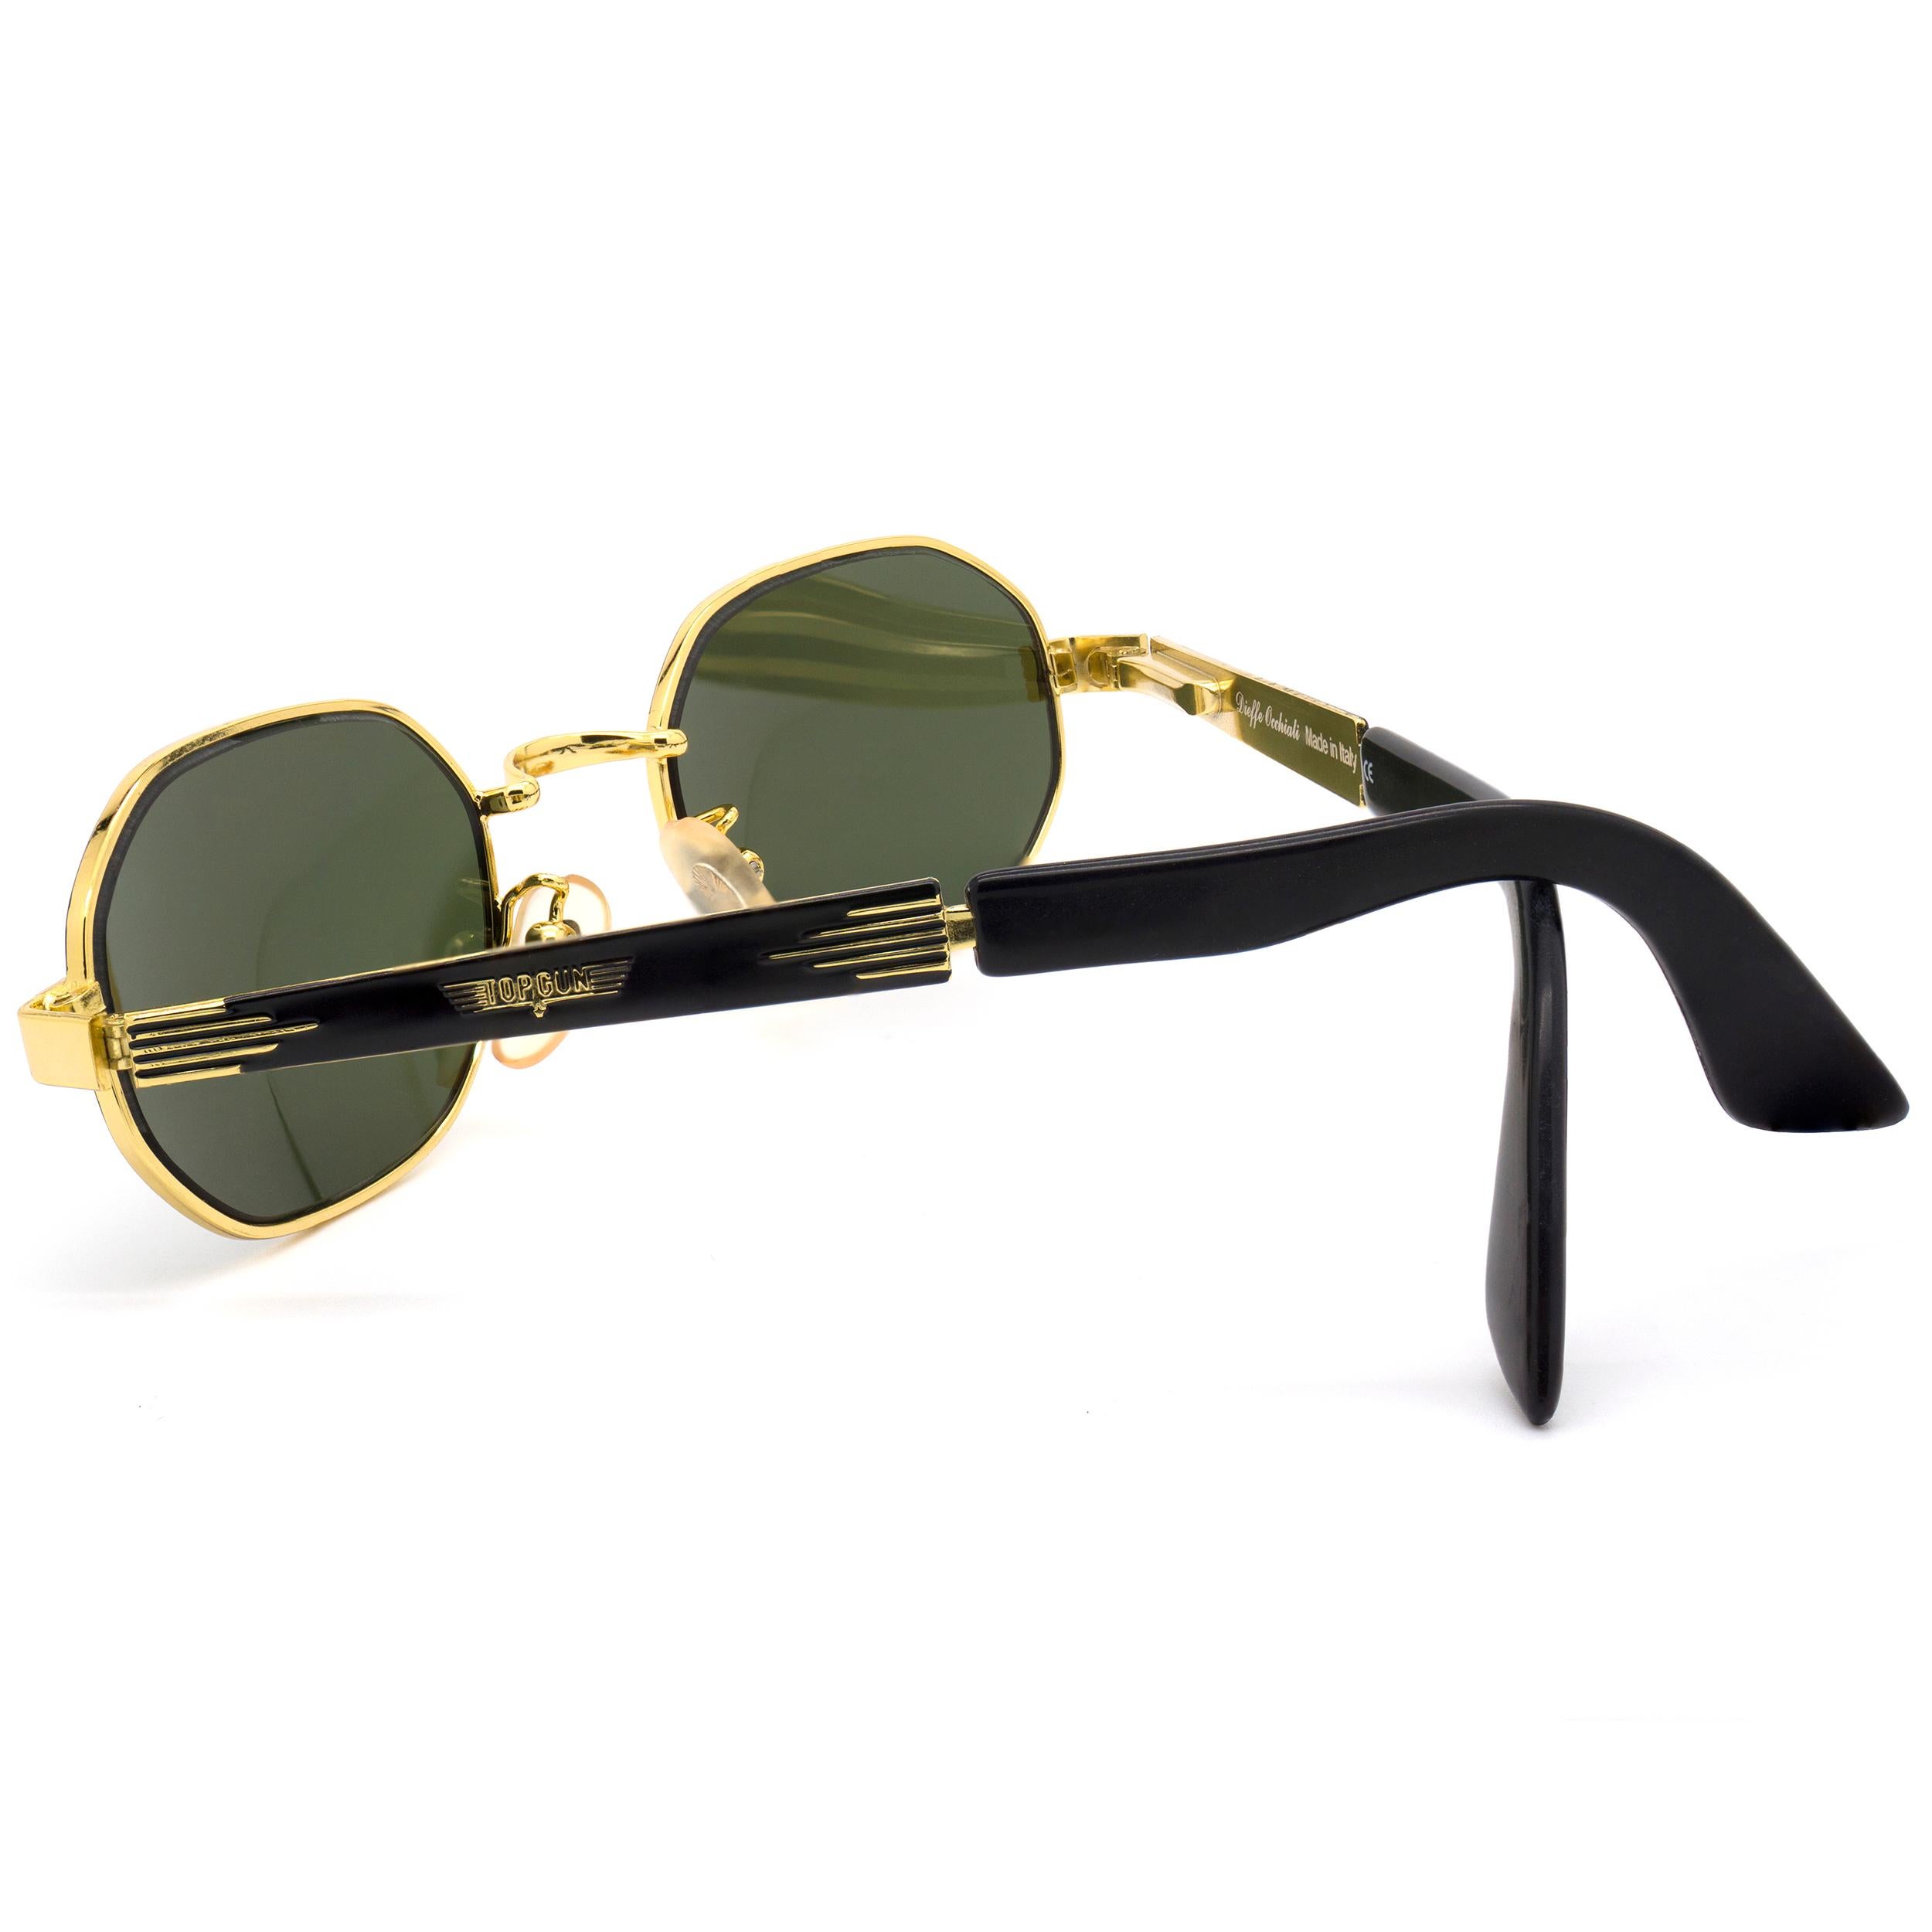 Top Gun hexagonal vintage sunglasses, ITALY 90s In New Condition For Sale In Santa Clarita, CA